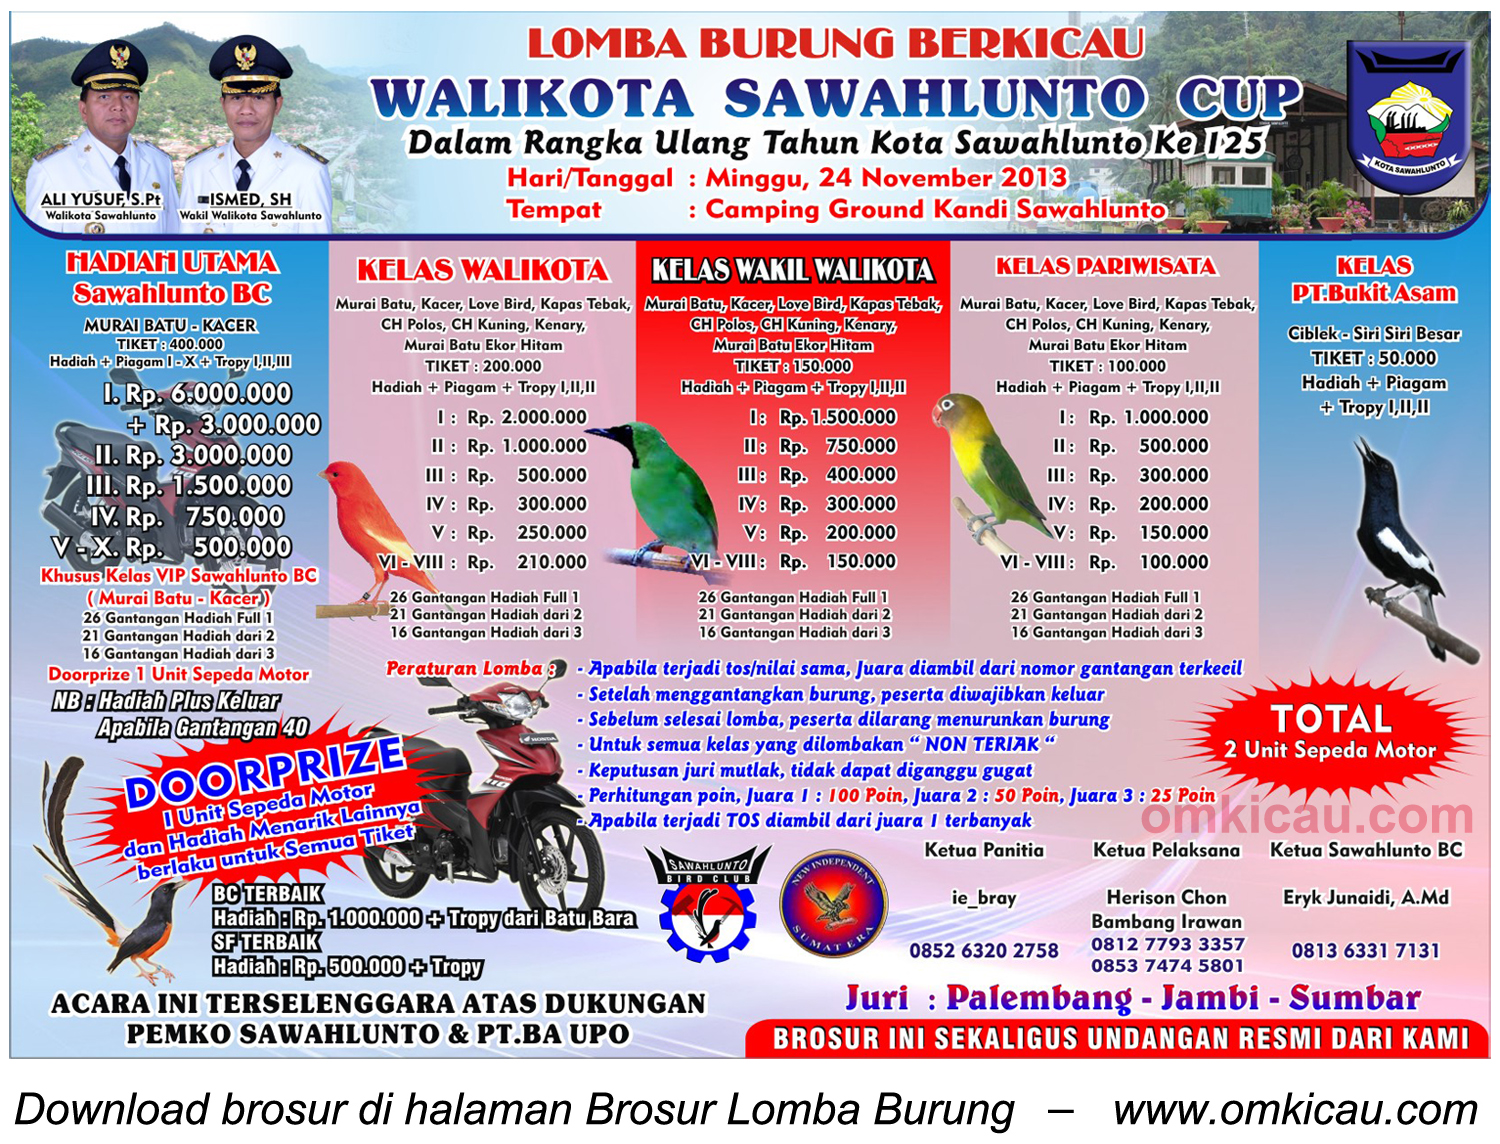 Brosur Lomba Burung Berkicau Wali Kota Sawahlunto Cup, Sawahlunto, 24 November 2013